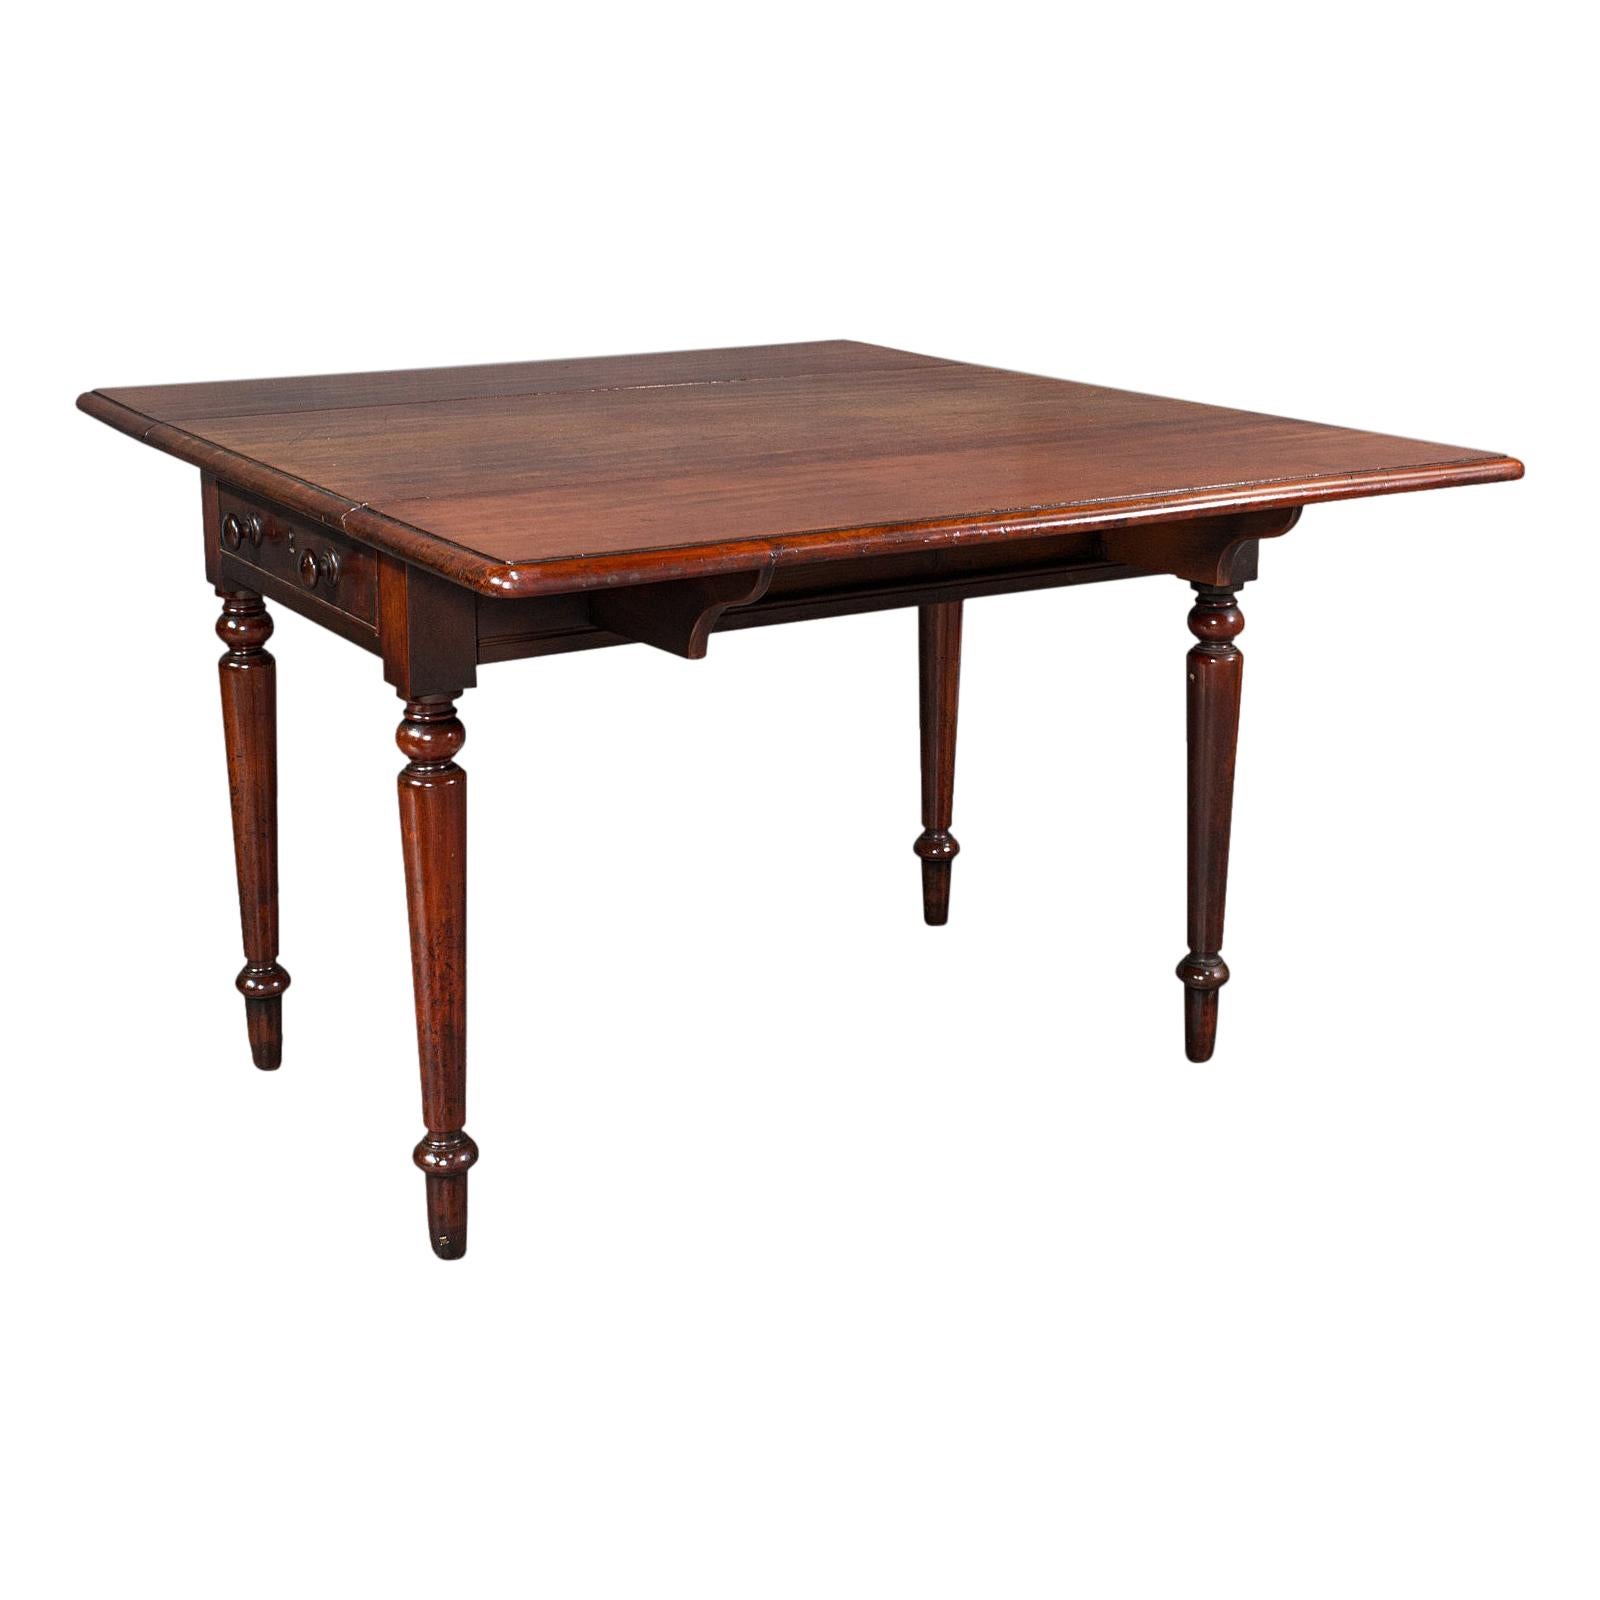 Antique Pembroke Table, English, Mahogany, Extending, Dining, Regency, C.1820